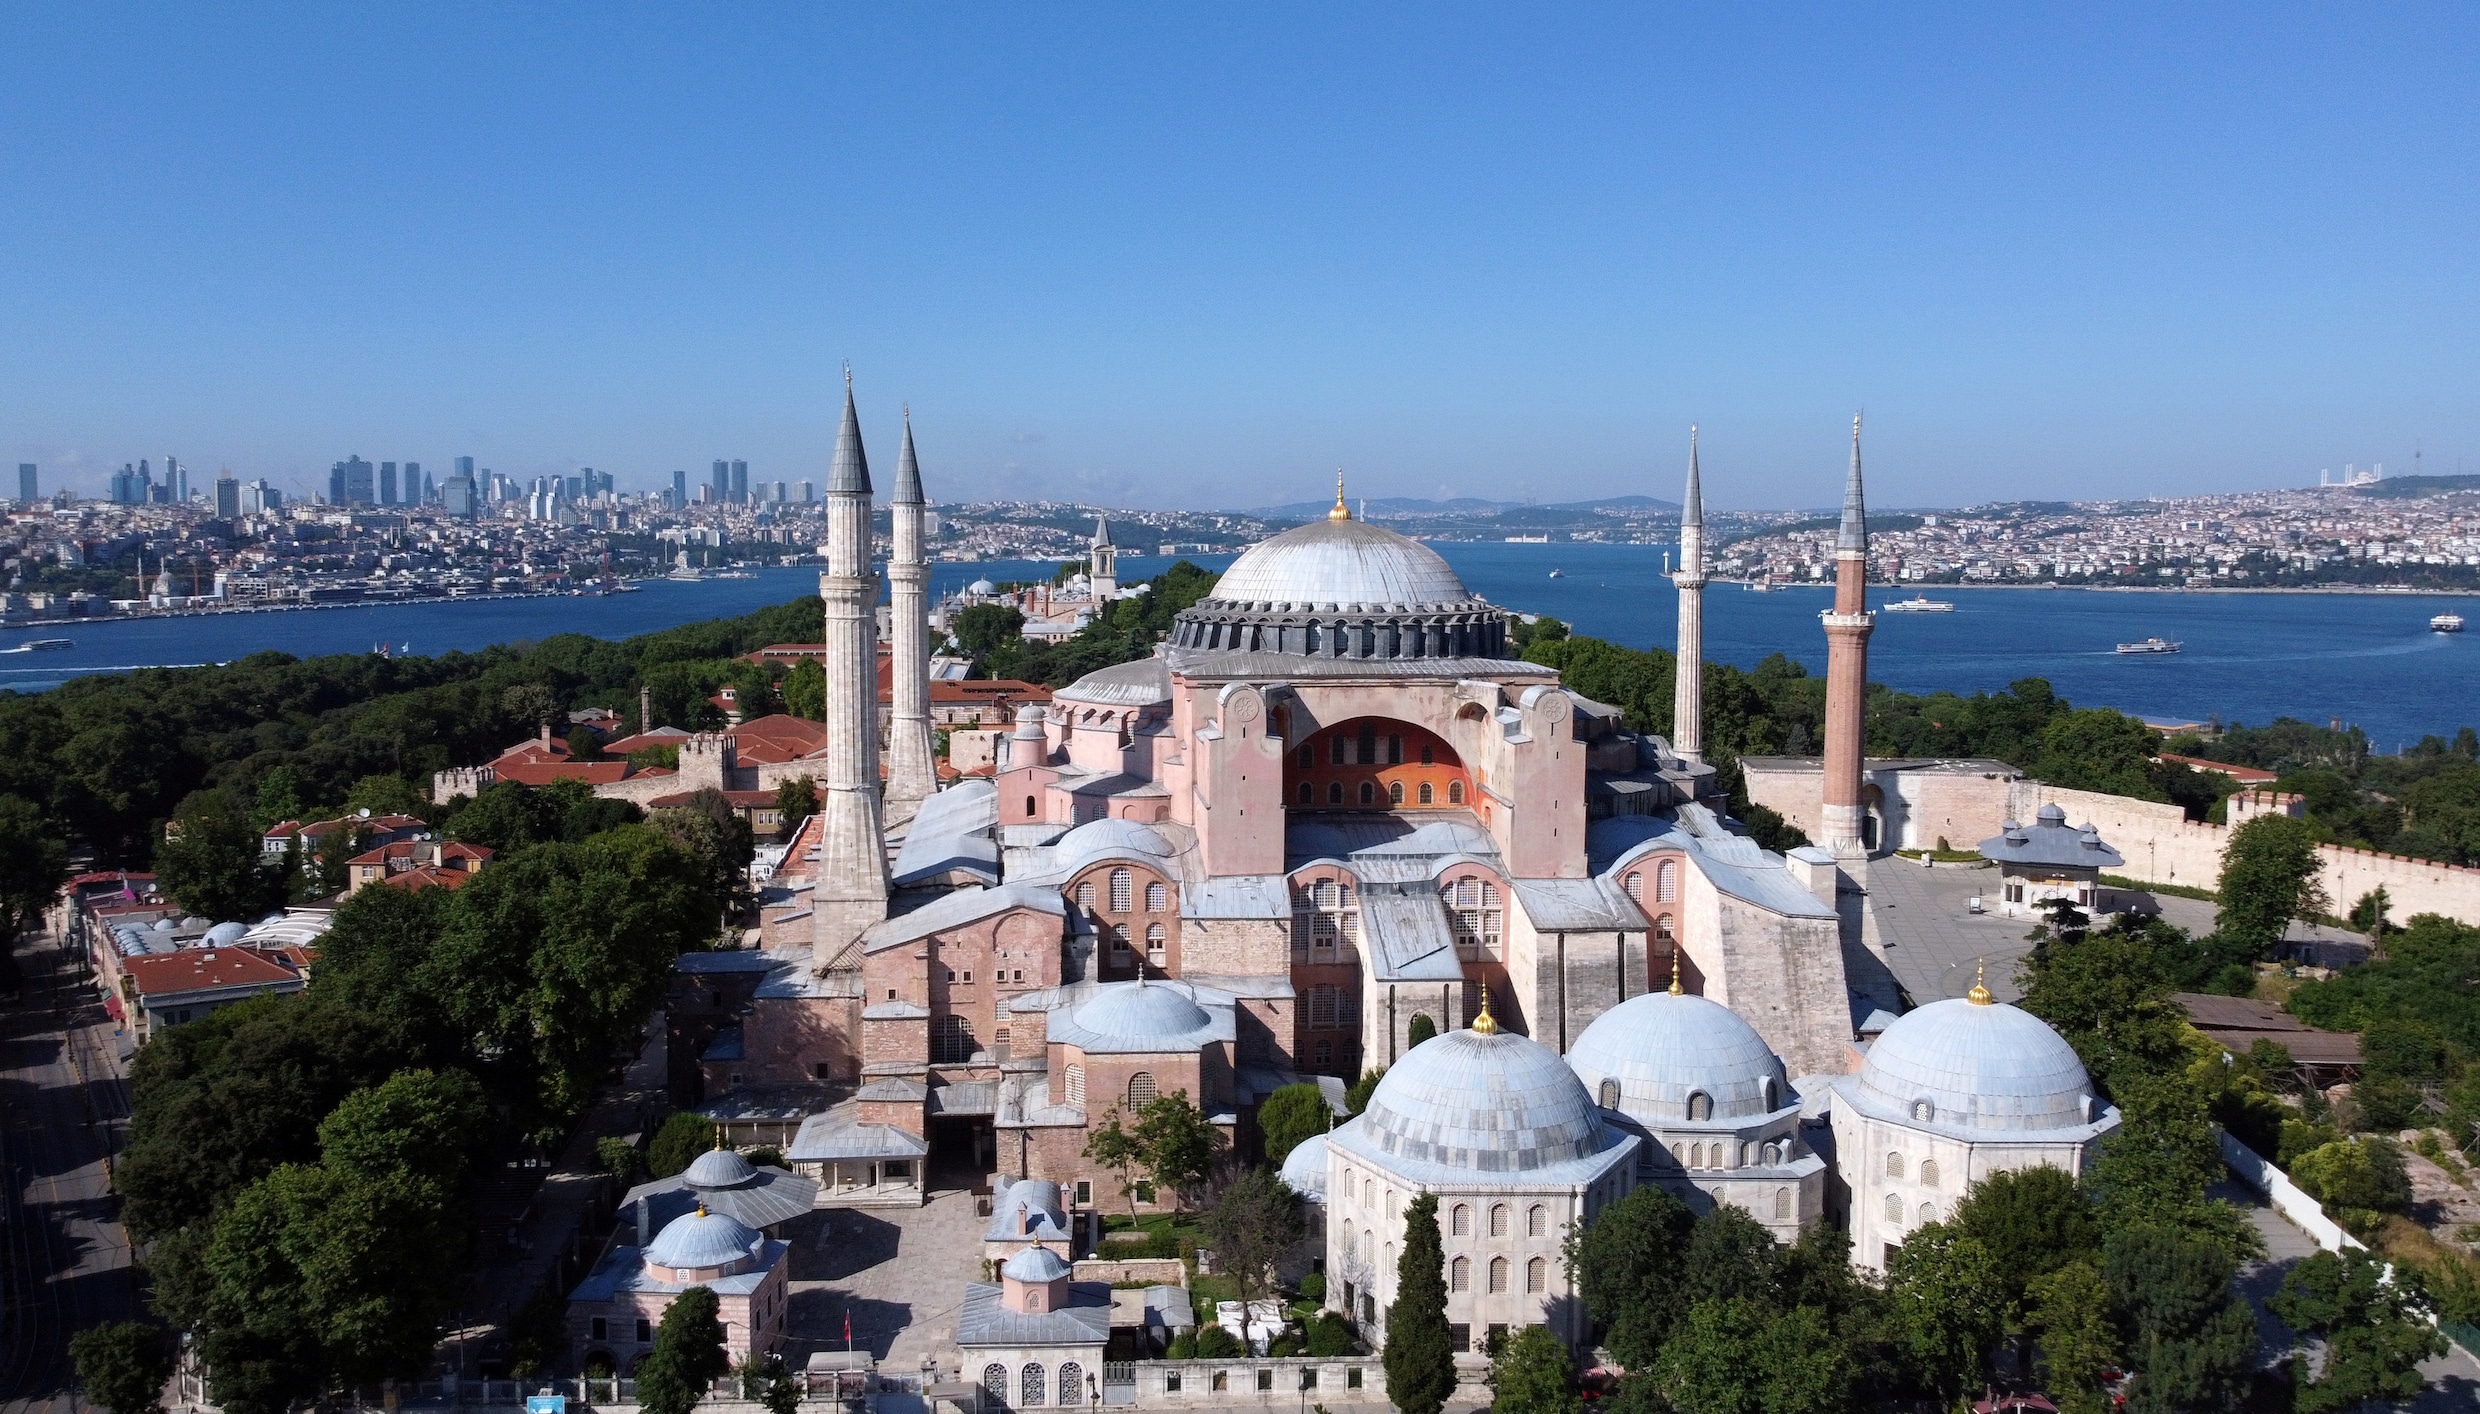 Plan van Turkije om Hagia Sophia om te toveren tot moskee stuit op steeds meer internationale kritiek